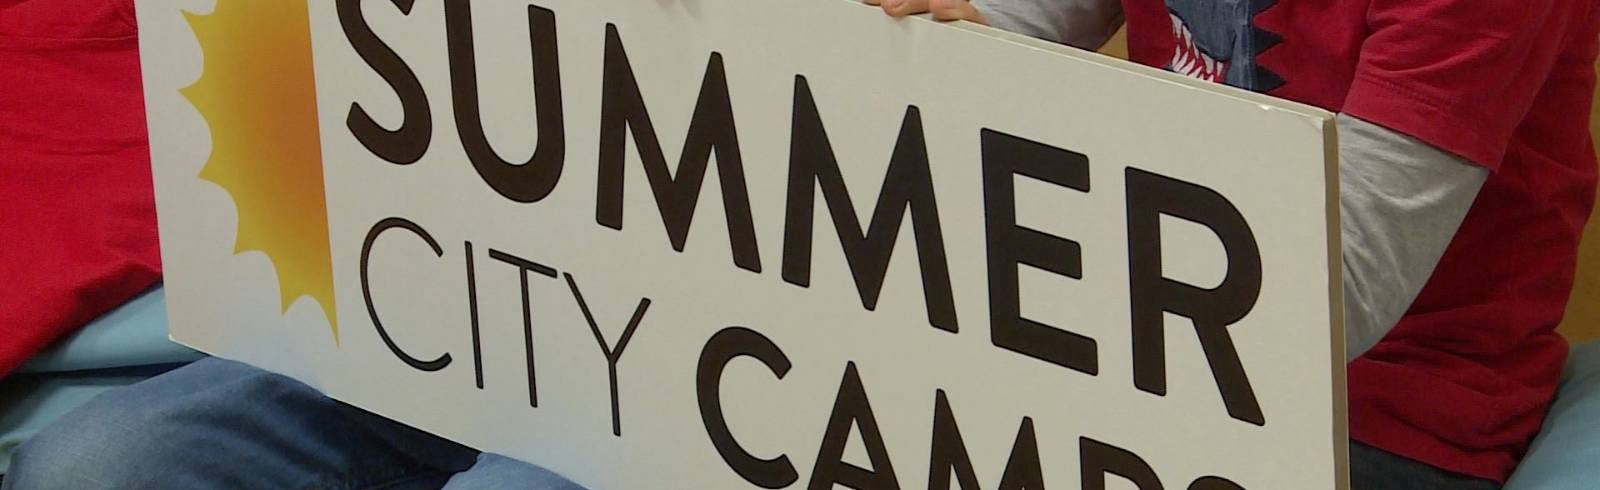 Summer City Camps: Lange Wartelisten